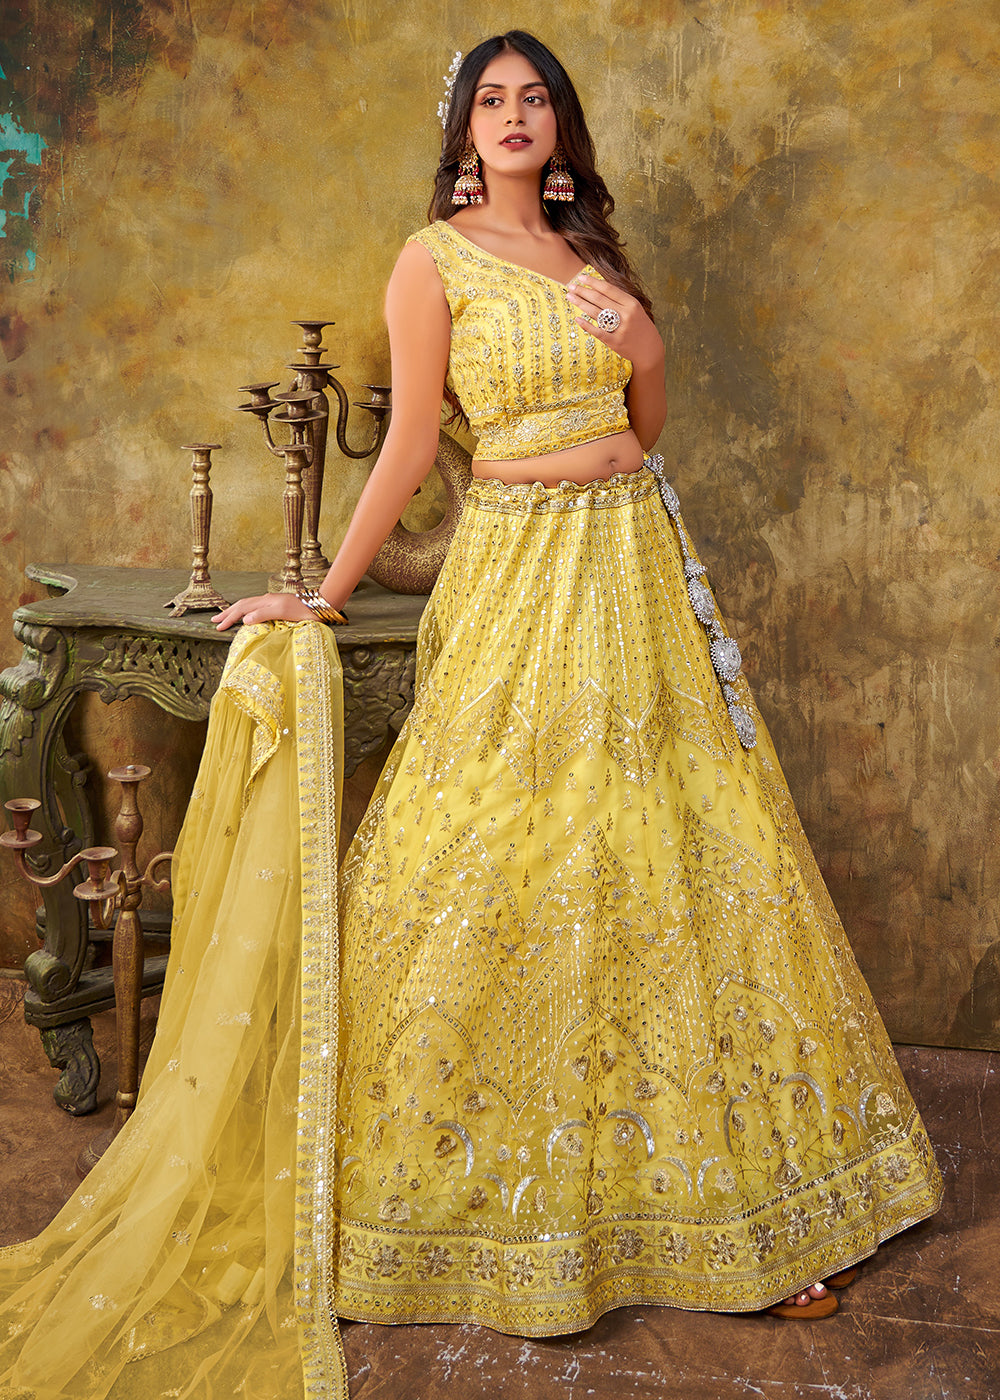 Buy Now Lemon Yellow Premium Net Sequins Wedding Lehenga Choli Online in USA, UK, Canada & Worldwide at Empress Clothing. 